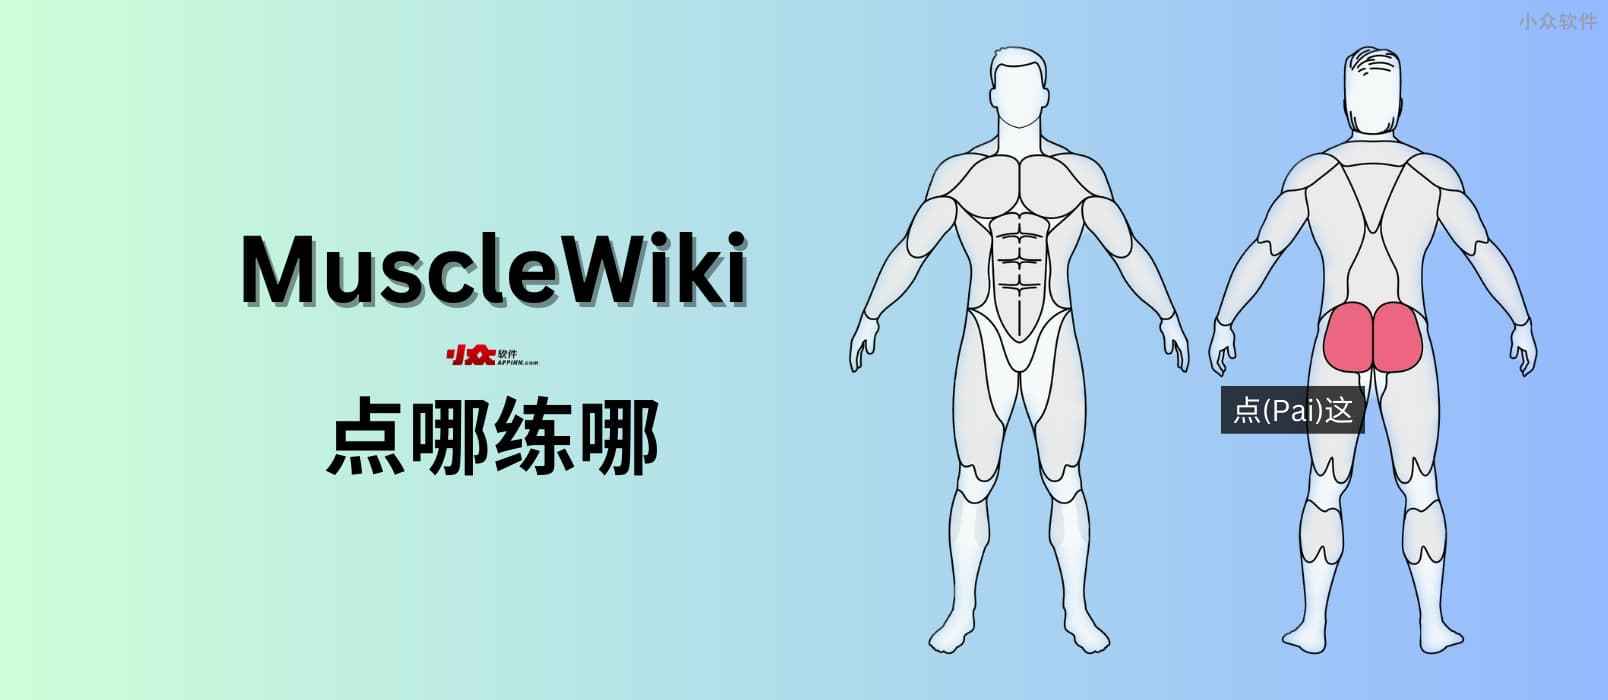 MuscleWiki – 点哪练哪，免费视频健身指南